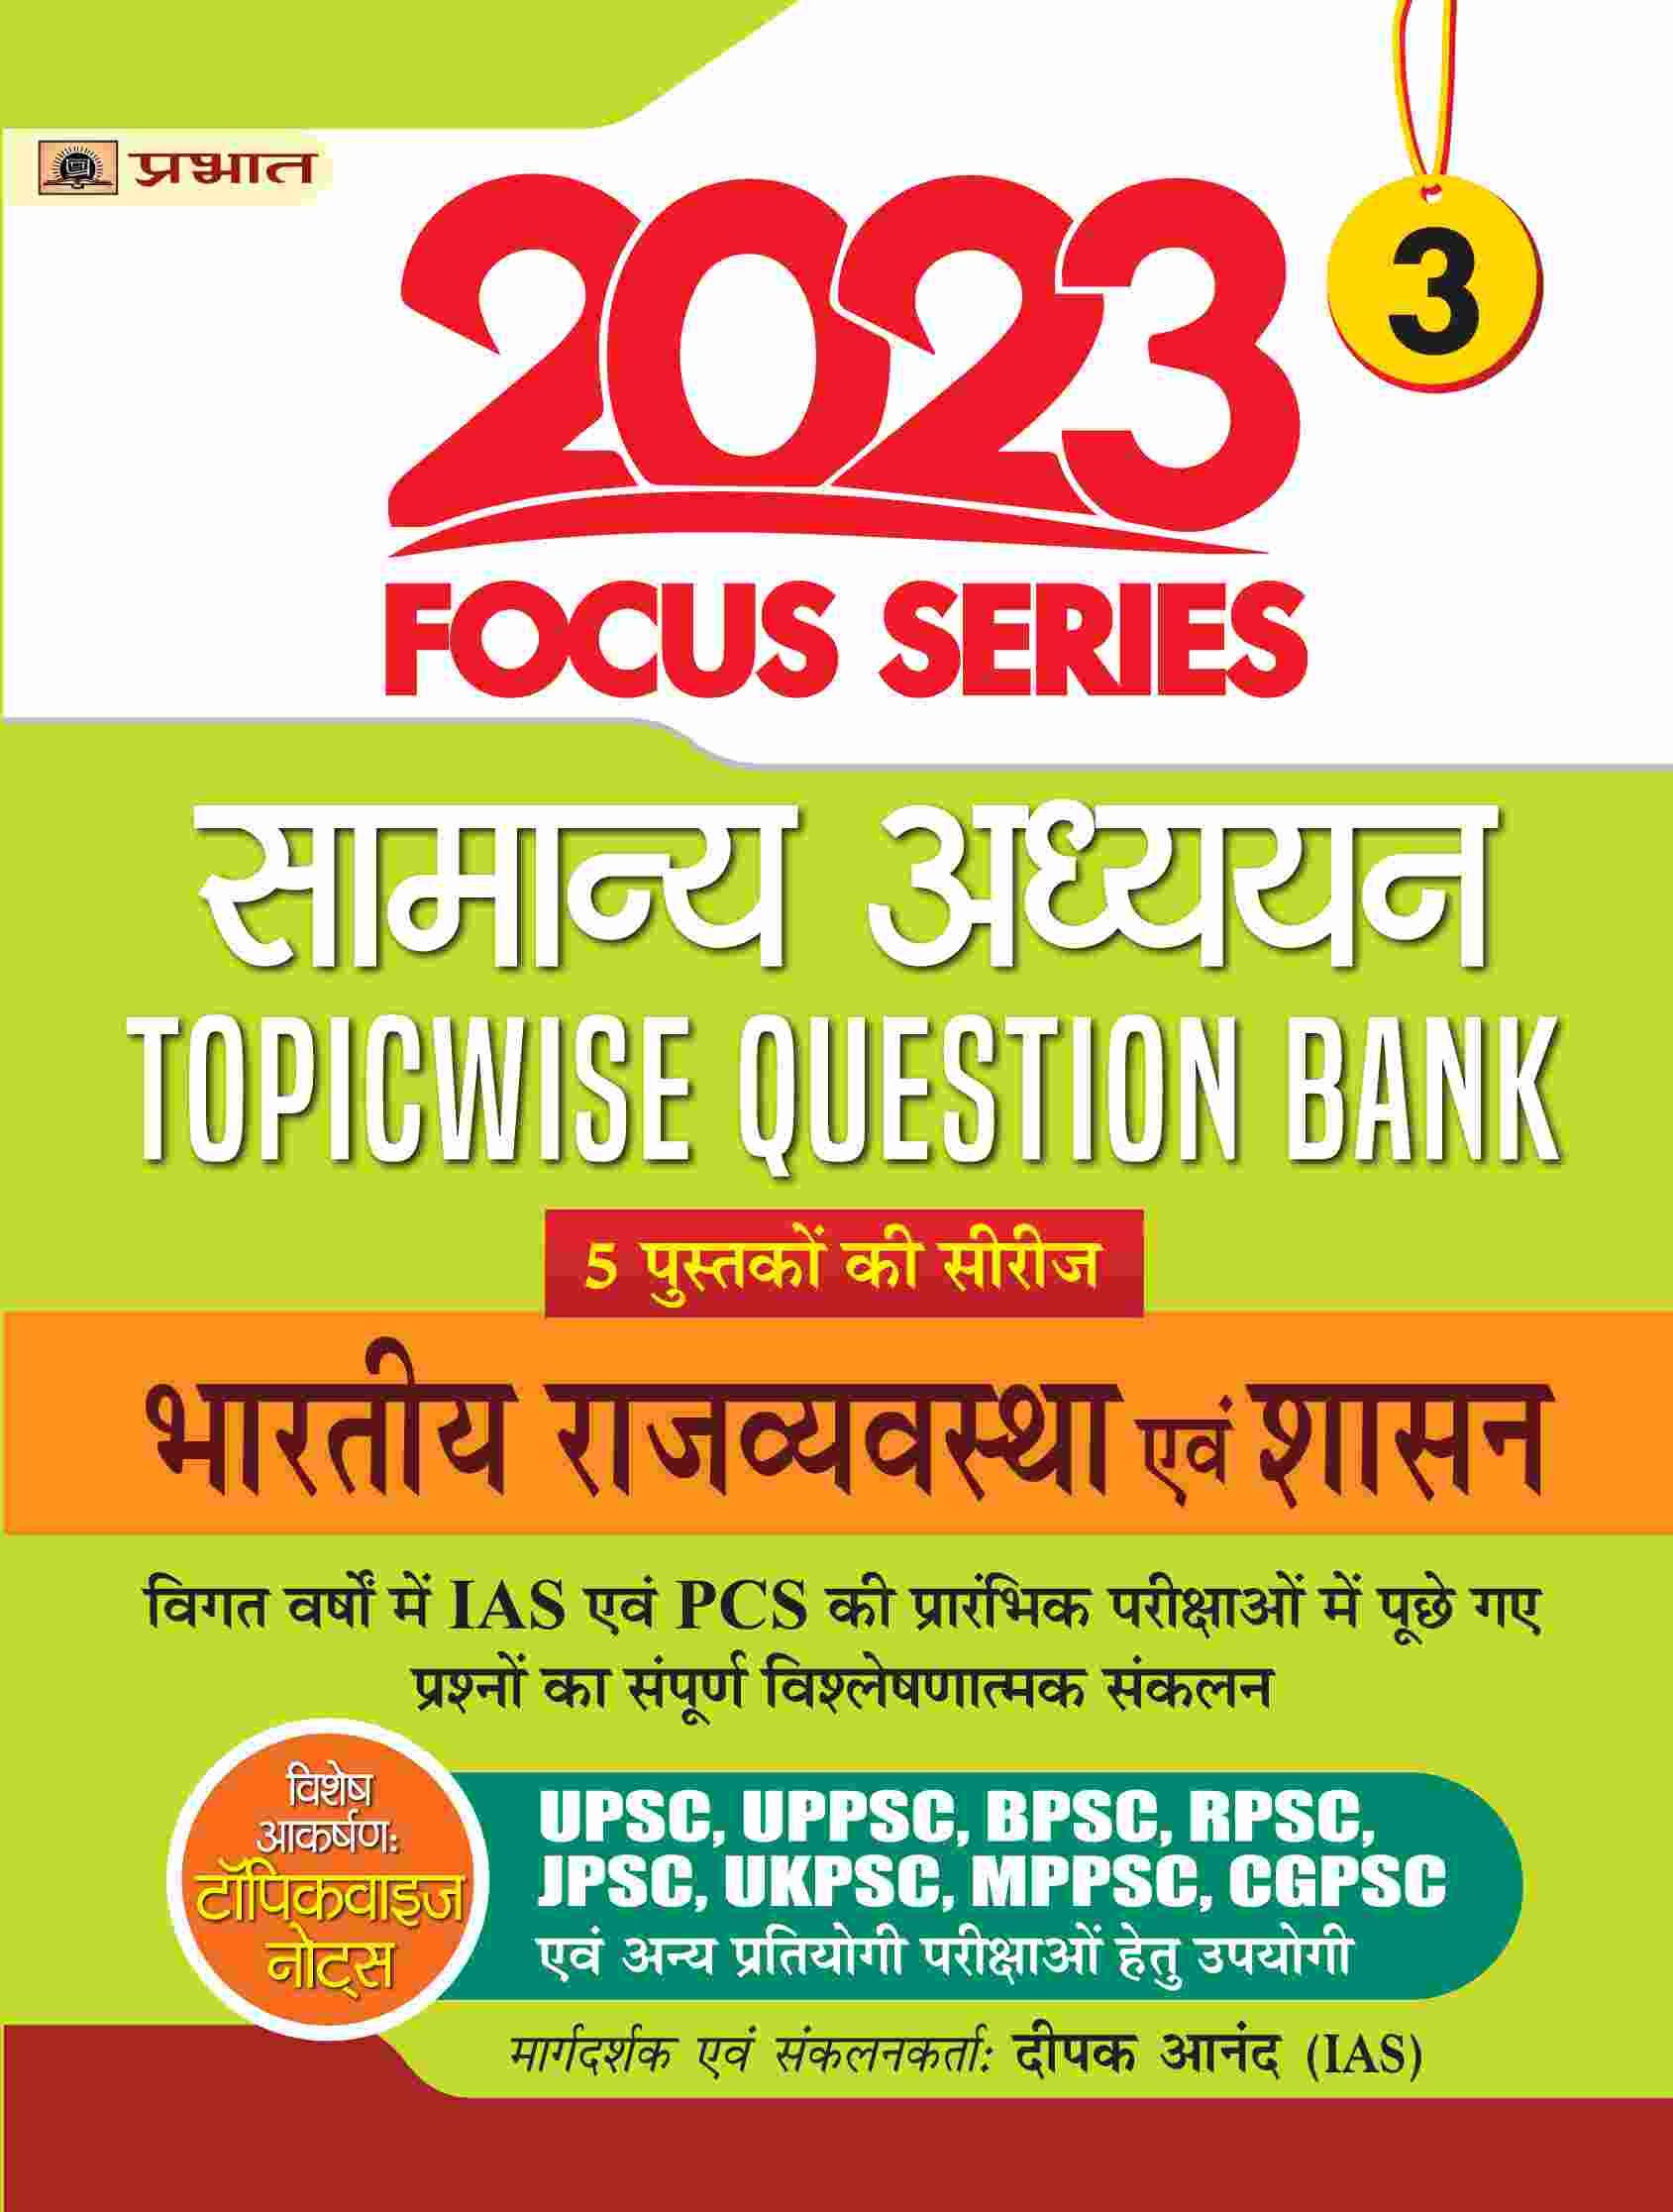 Focus Series : Samanya Adhyayan Topicwise Question Bank 2023 Bhartiya Rajvyavastha Evam Shasan (Indian Polity and Governance)